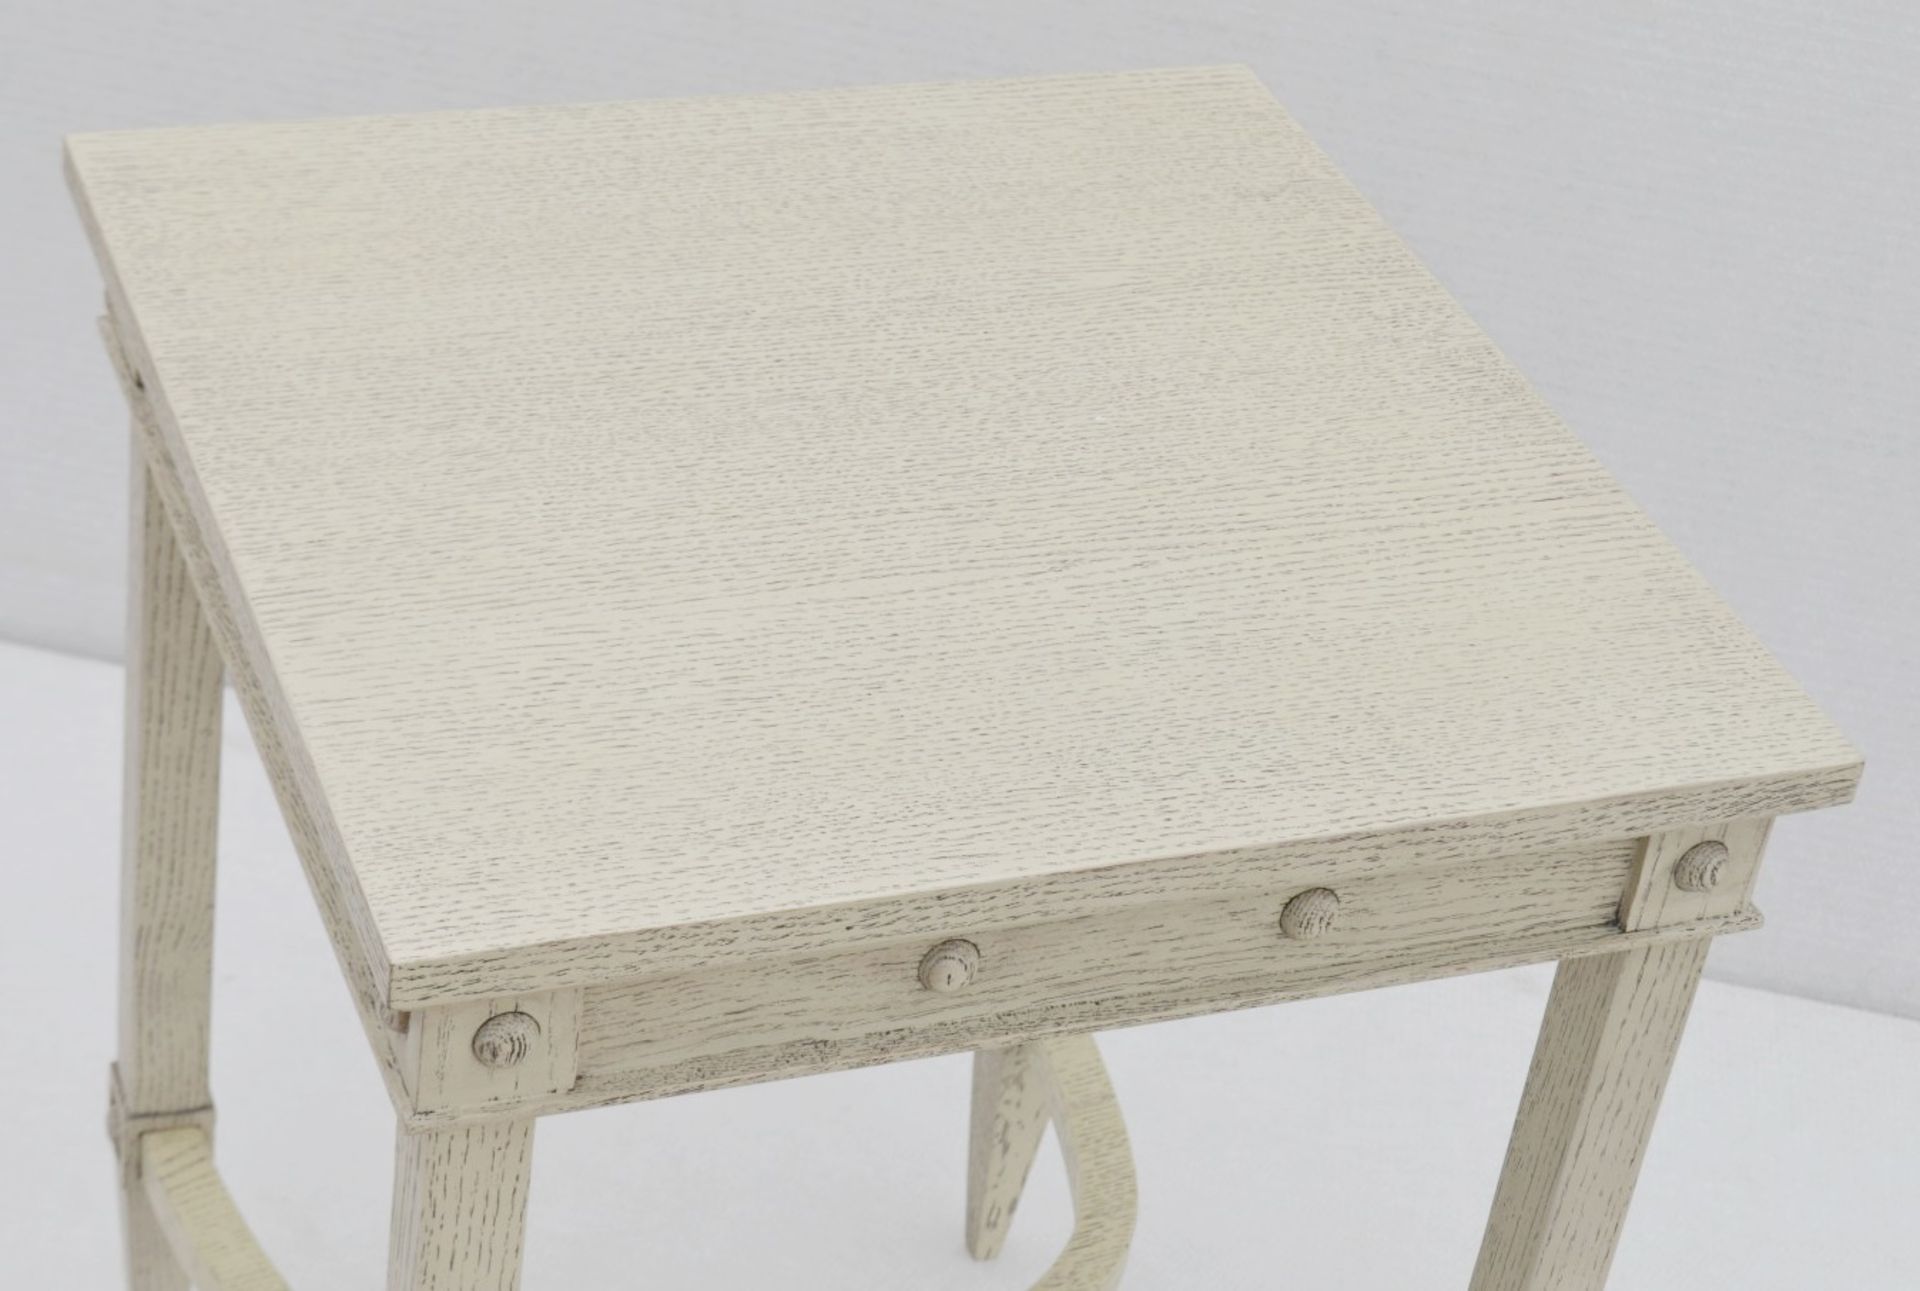 1 x JUSTIN VAN BREDA 'Thomas' Designer Georgian-inspired Table In Limed Grey Oak - RRP £1,320 - Image 4 of 6